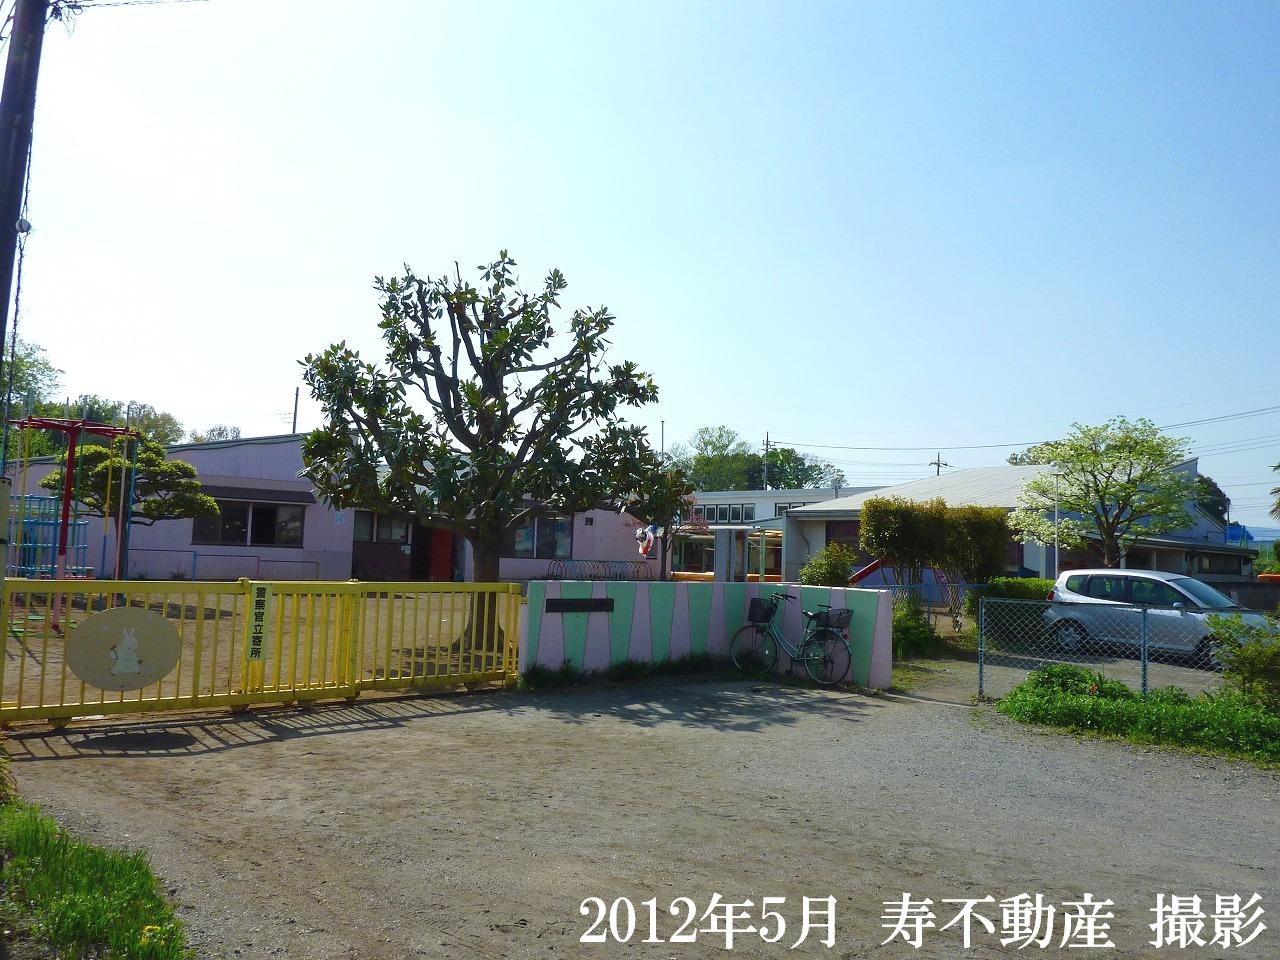 kindergarten ・ Nursery. Okegawa Hideya nursery school (kindergarten ・ 779m to the nursery)